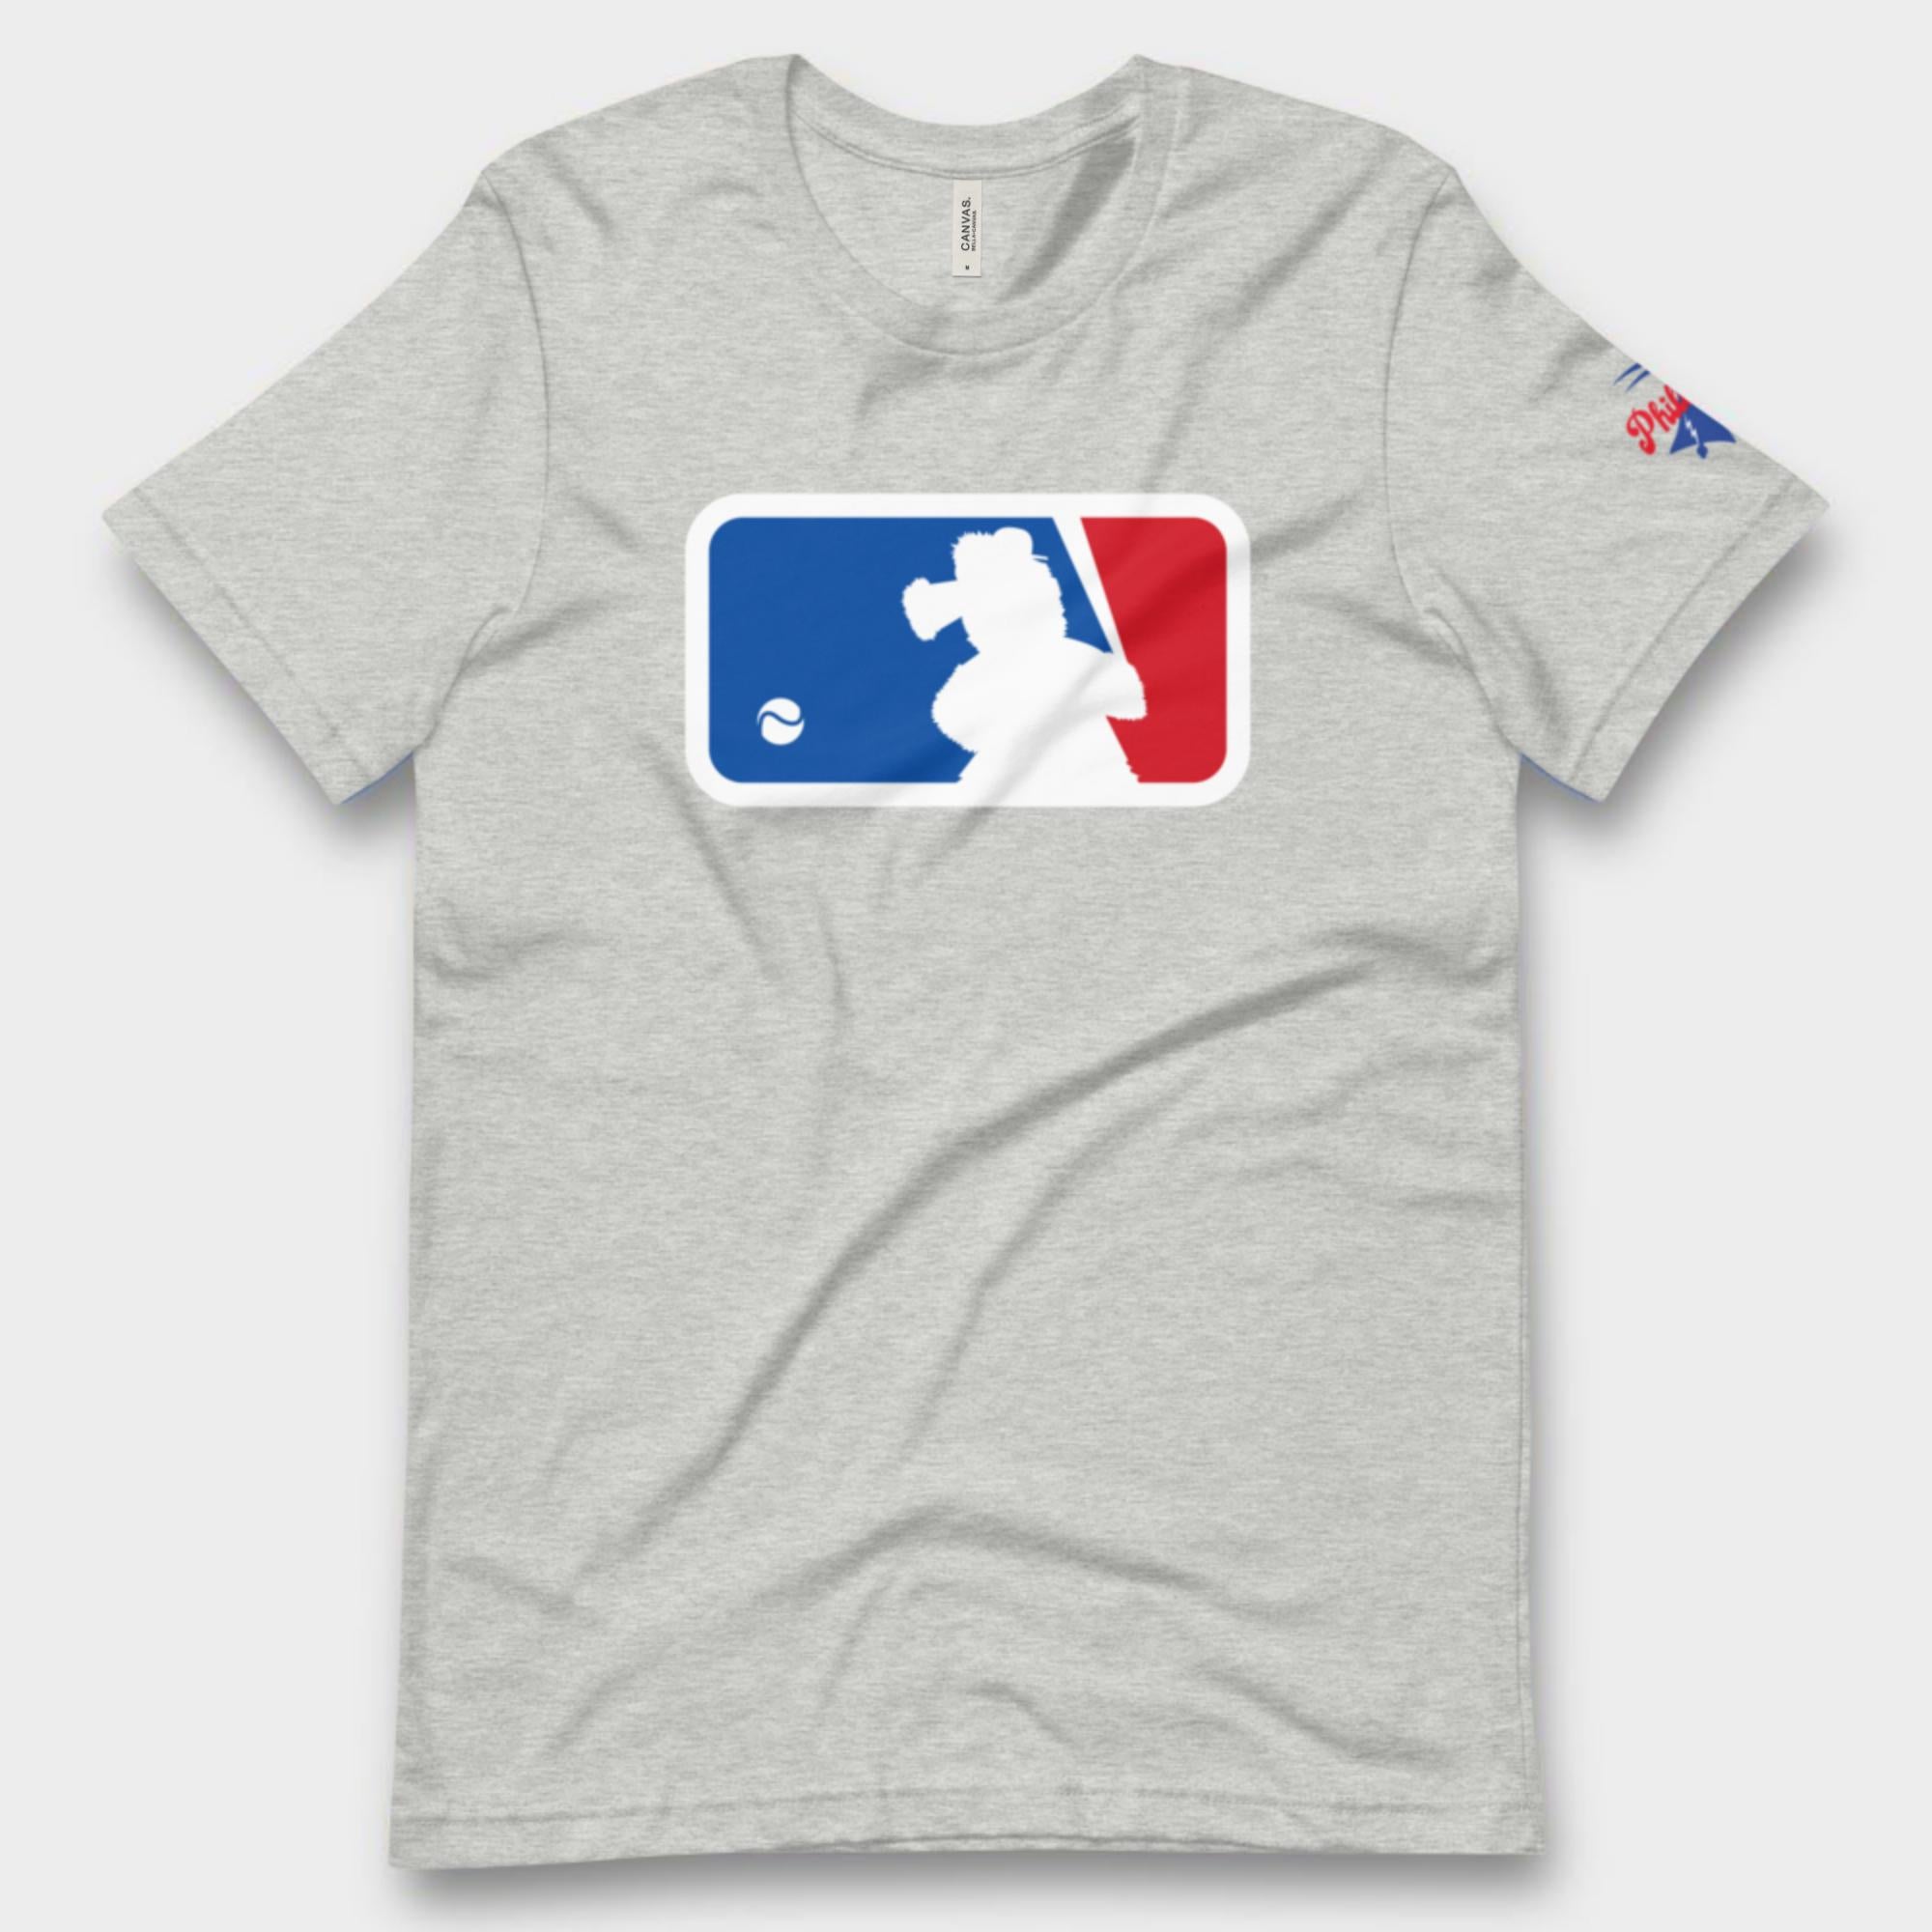 philadelphia phillies baseball shirts